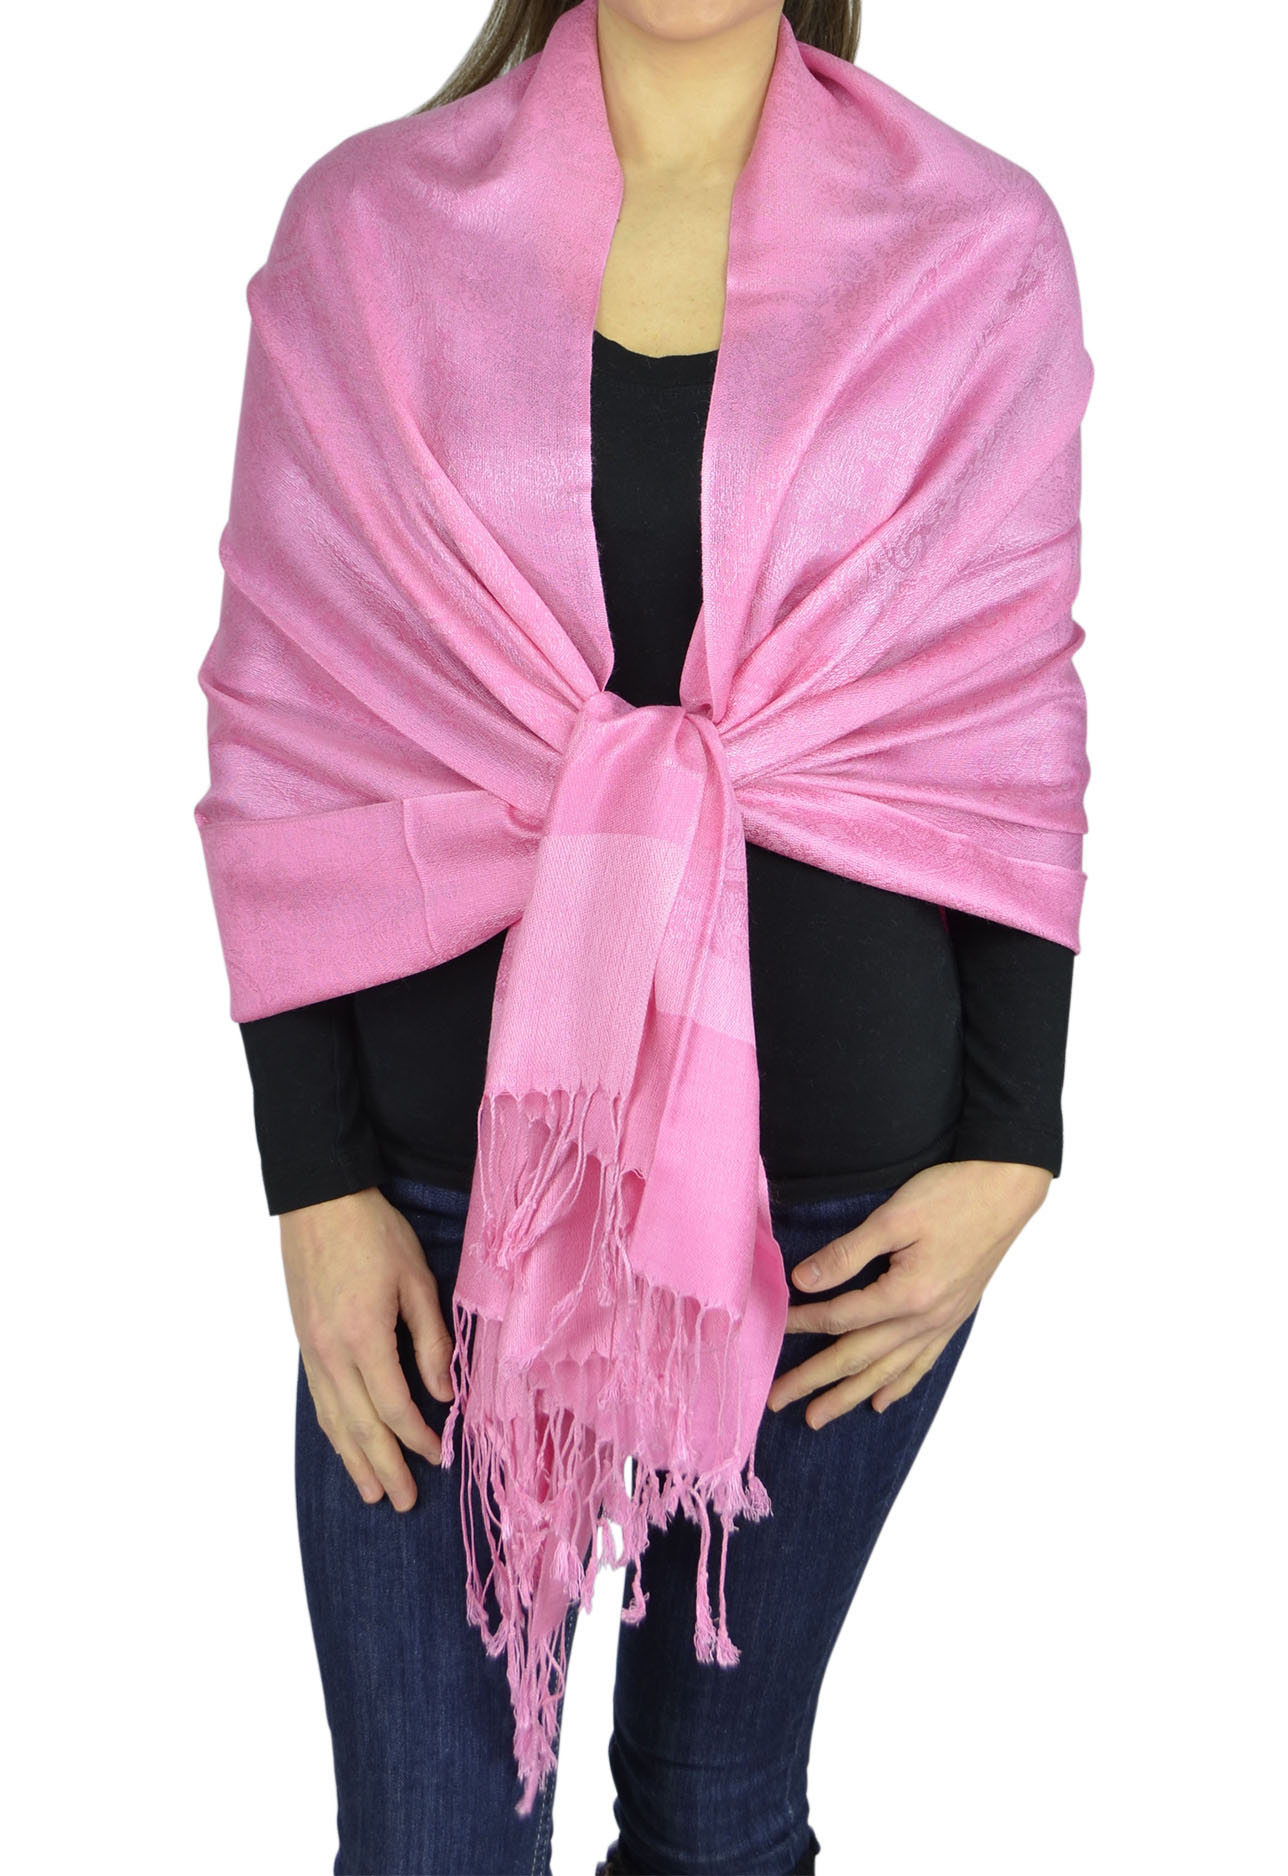 Belle Donne Jacquard Paisley Pashmina Soft Elegant Scarves Wrap Shawl Stole - Bright Pink